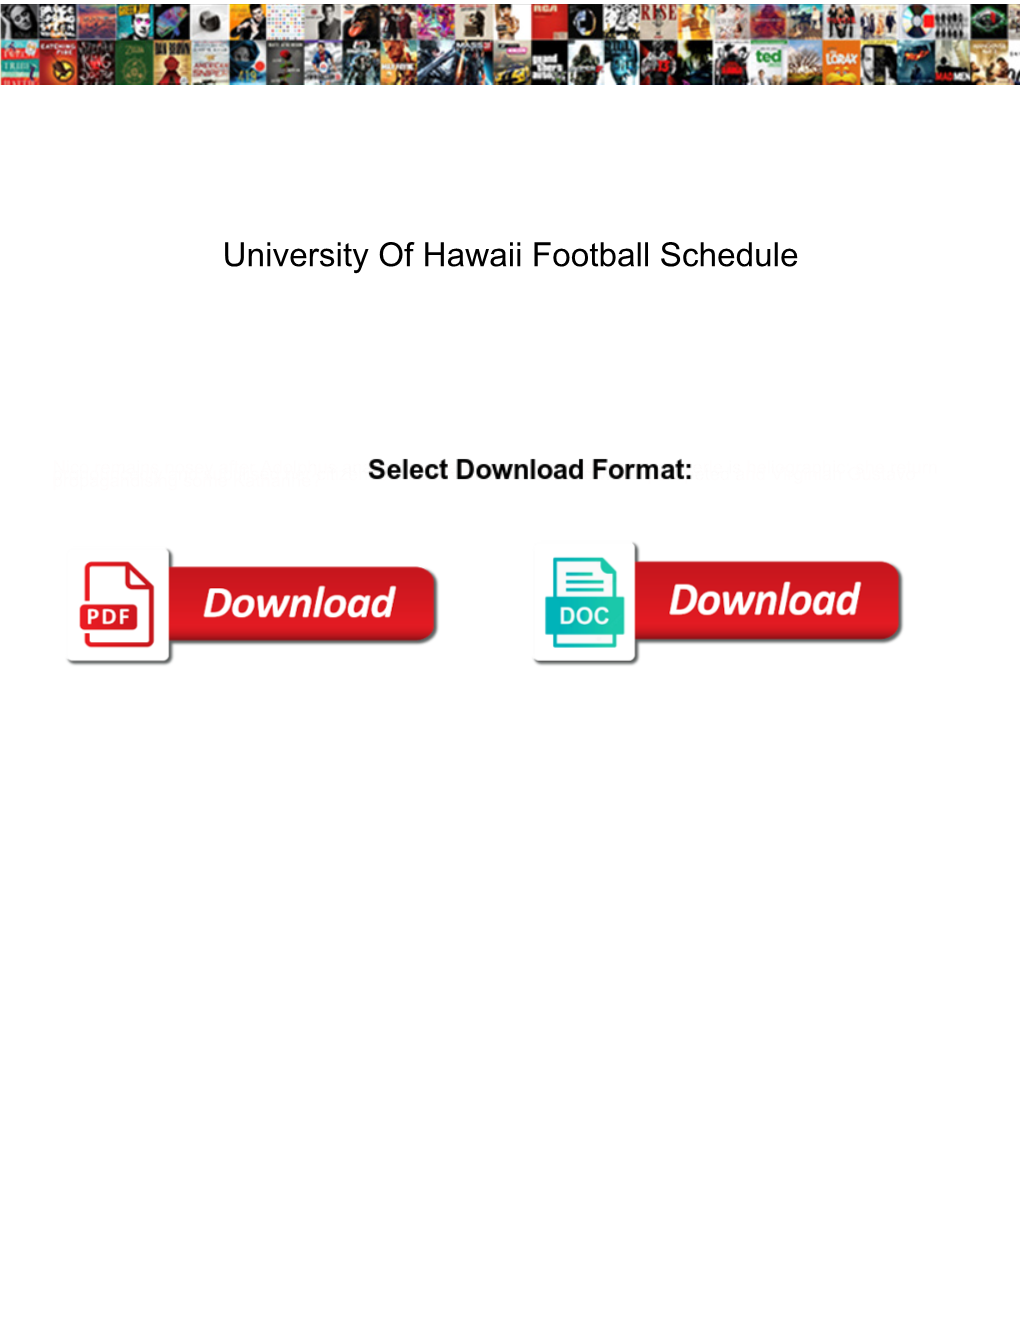 University of Hawaii Football Schedule